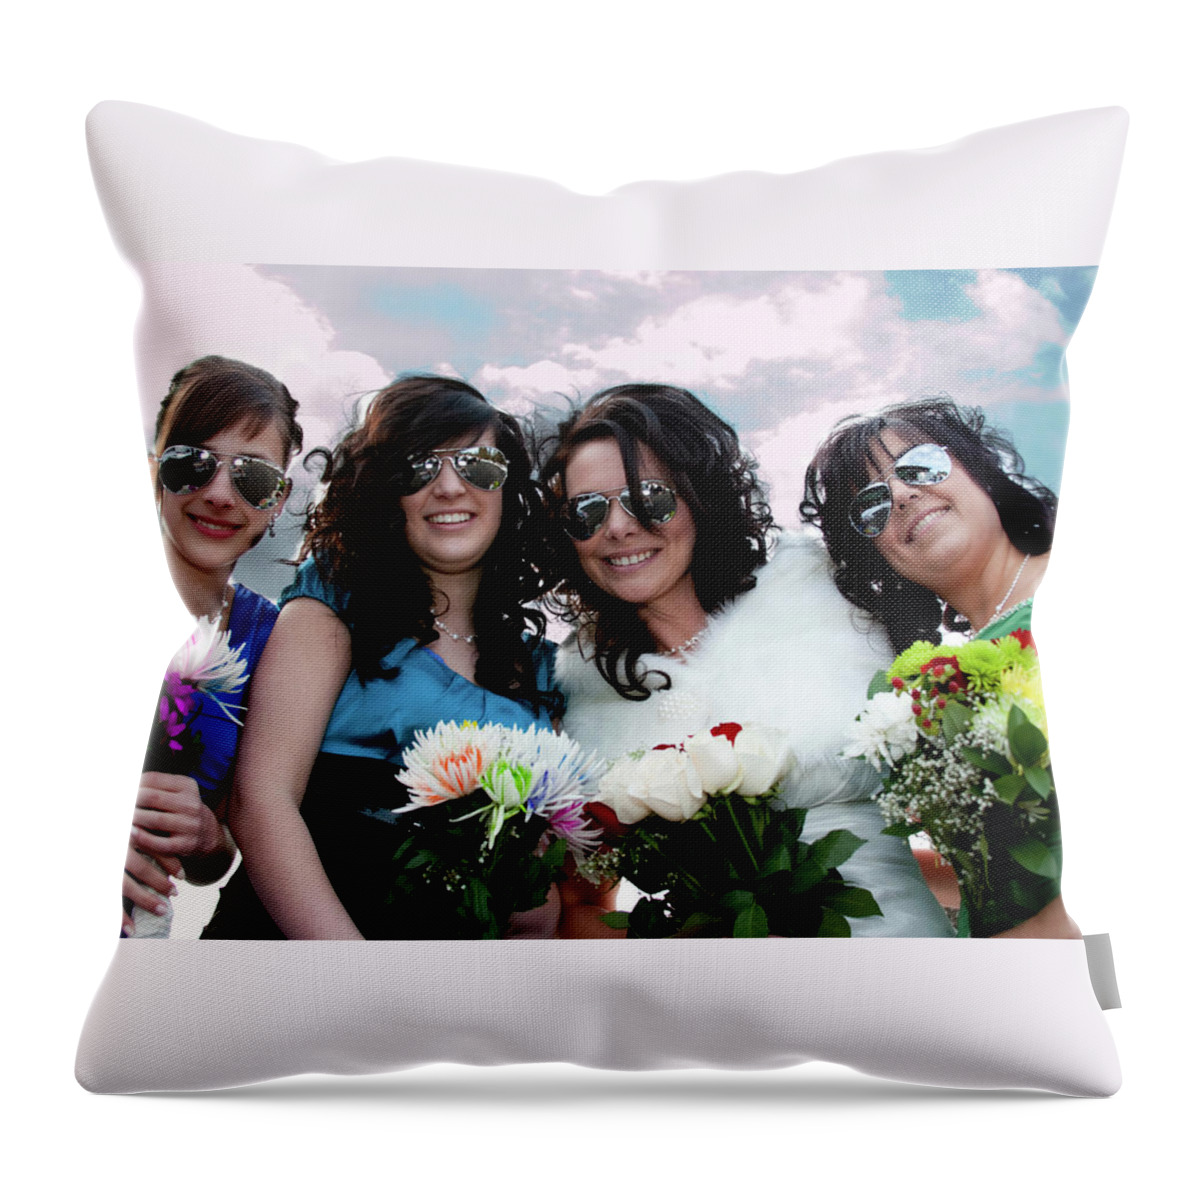 Wedding Throw Pillow featuring the photograph Wedding #6 by Daniel Martin